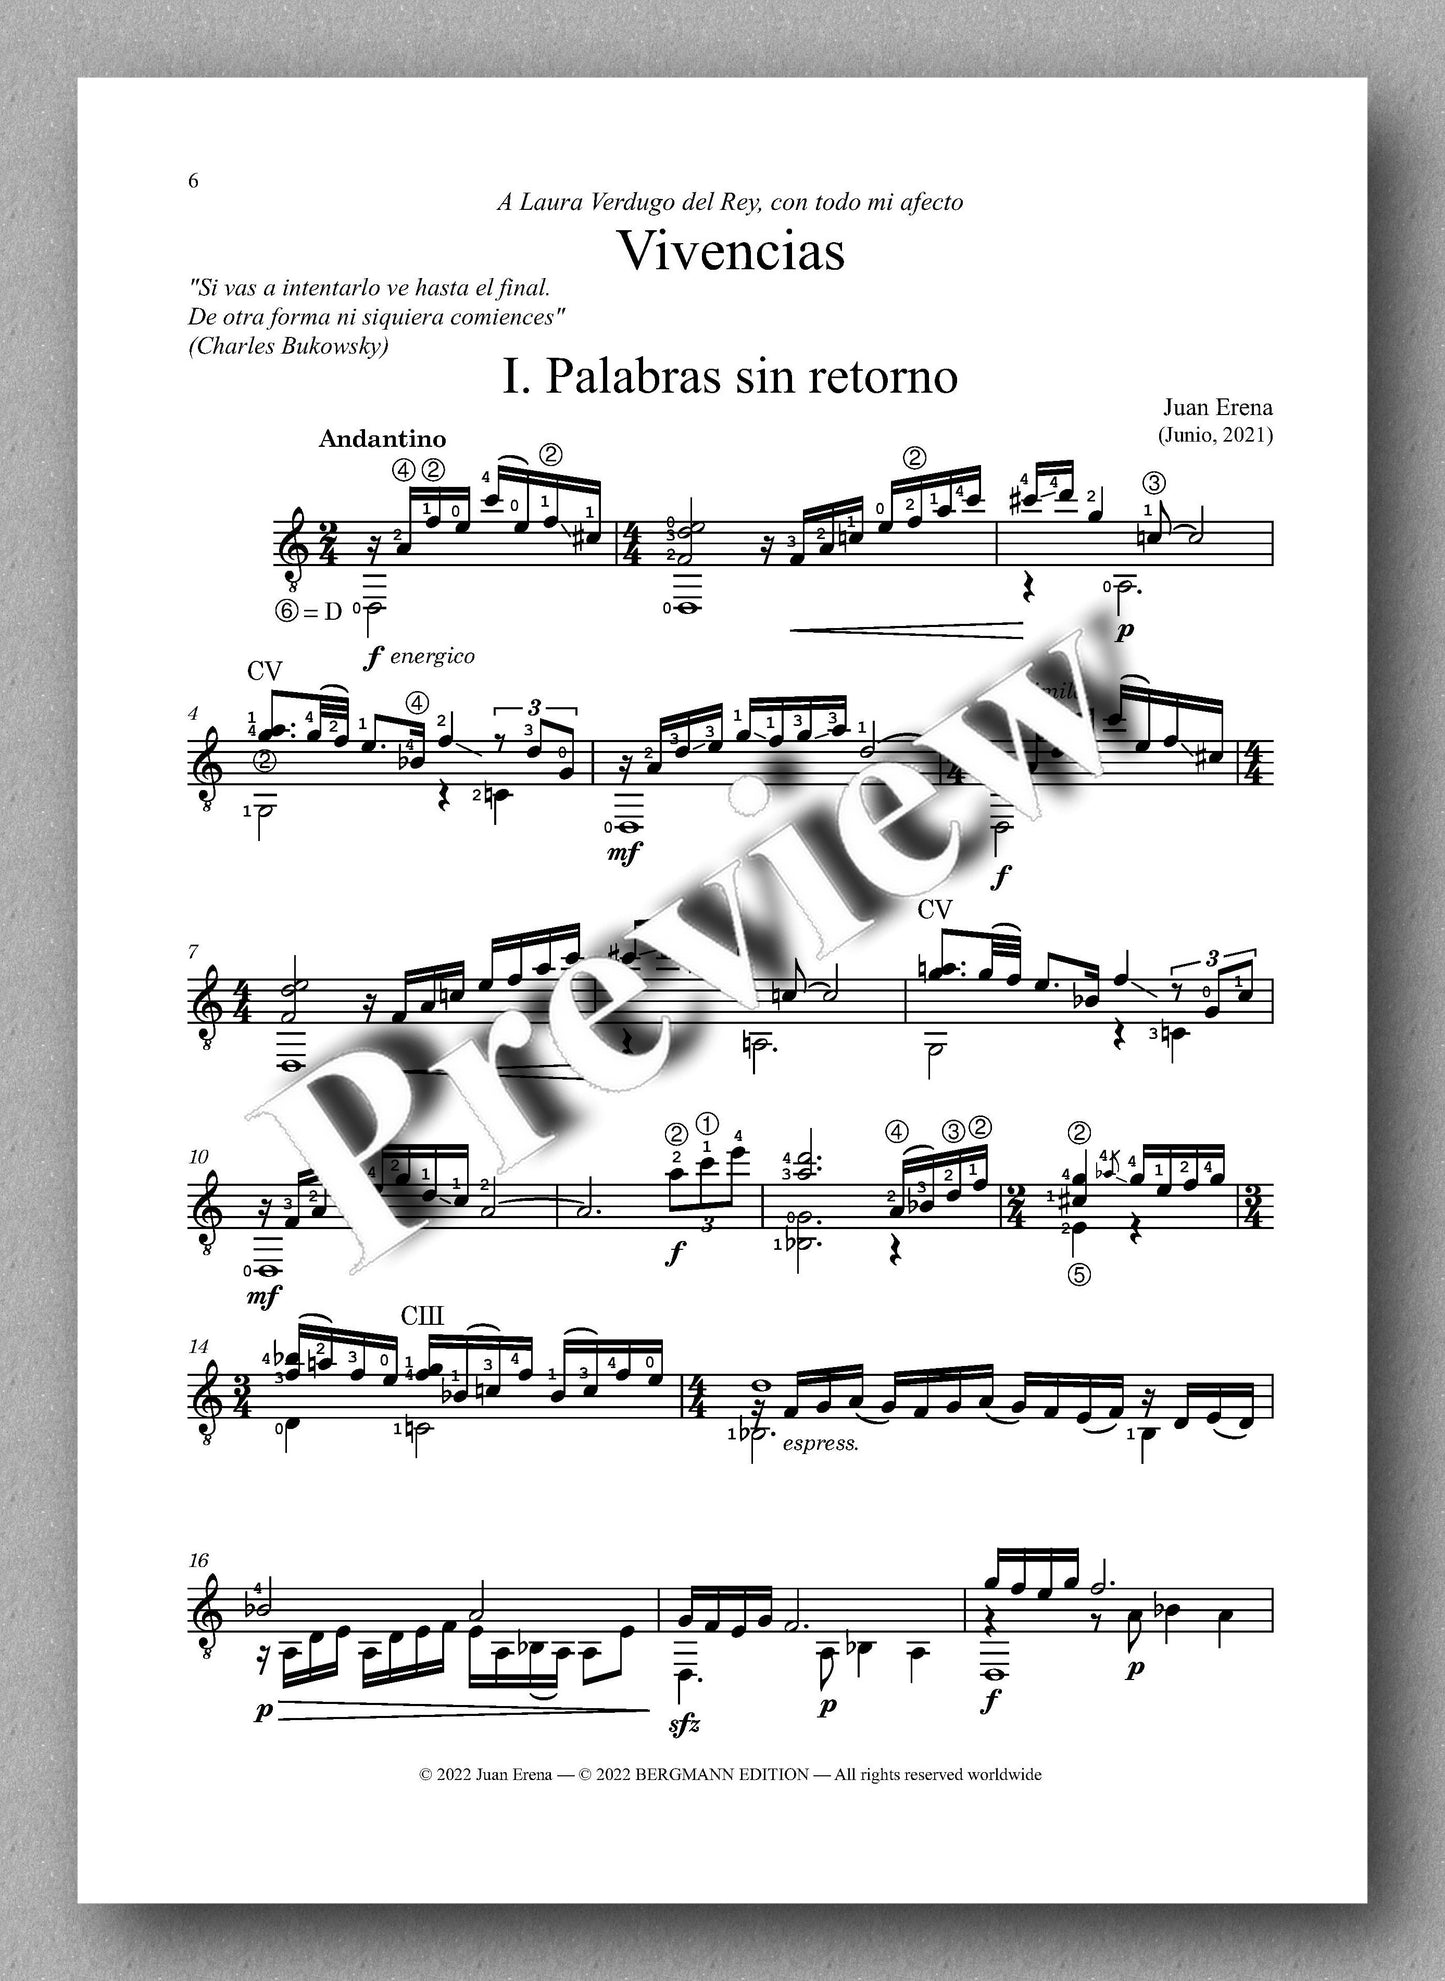 Juan Erena, Vivencias - music score 1